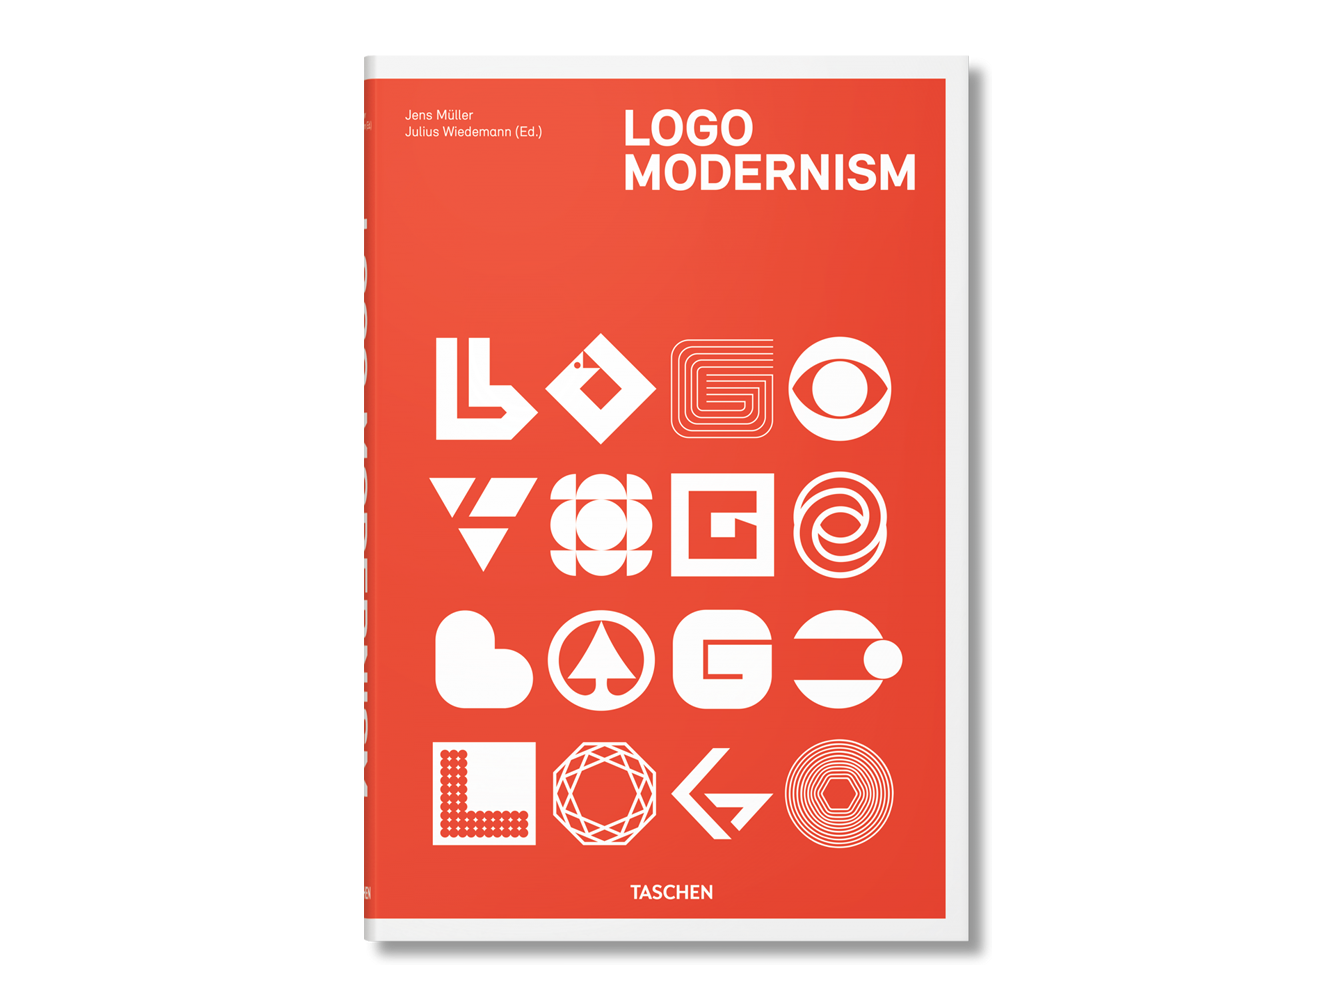 Logo Modernism, Taschen 2015